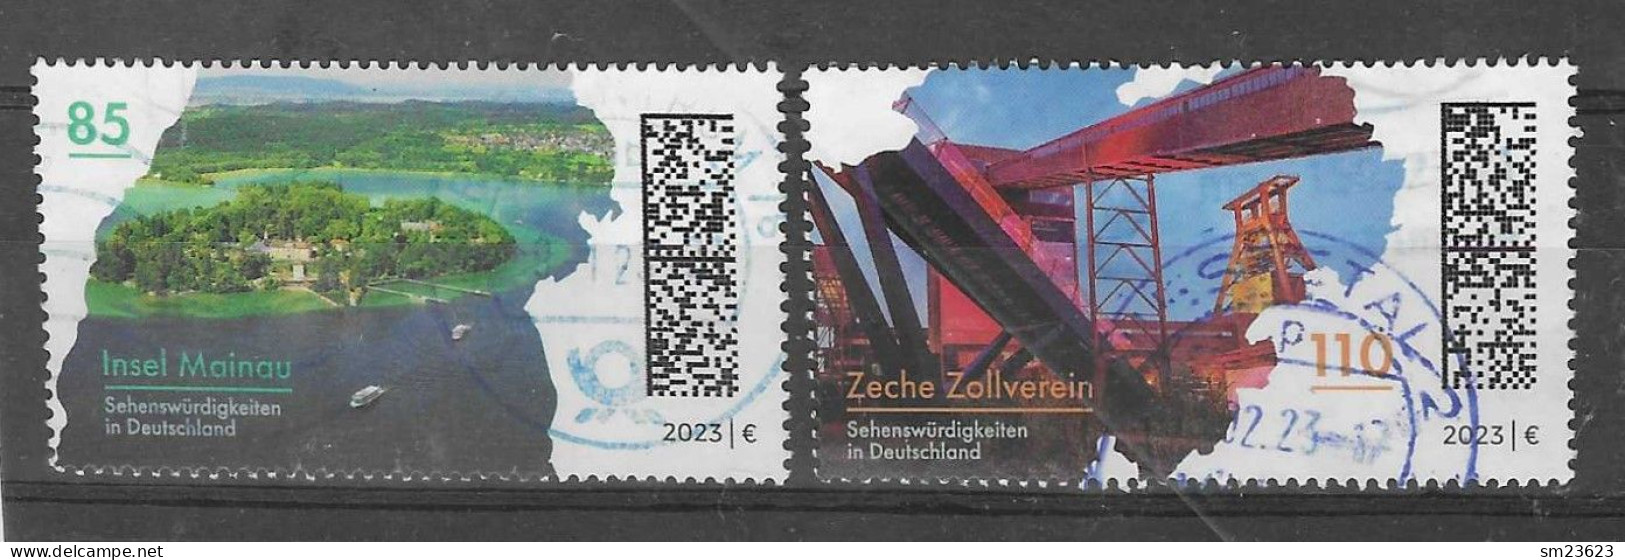 BRD 2023  Mi.Nr. 3738 / 39, Insel Mainau / Zeche Zollverein - Gestempelt / Fine Used / (o) - Oblitérés